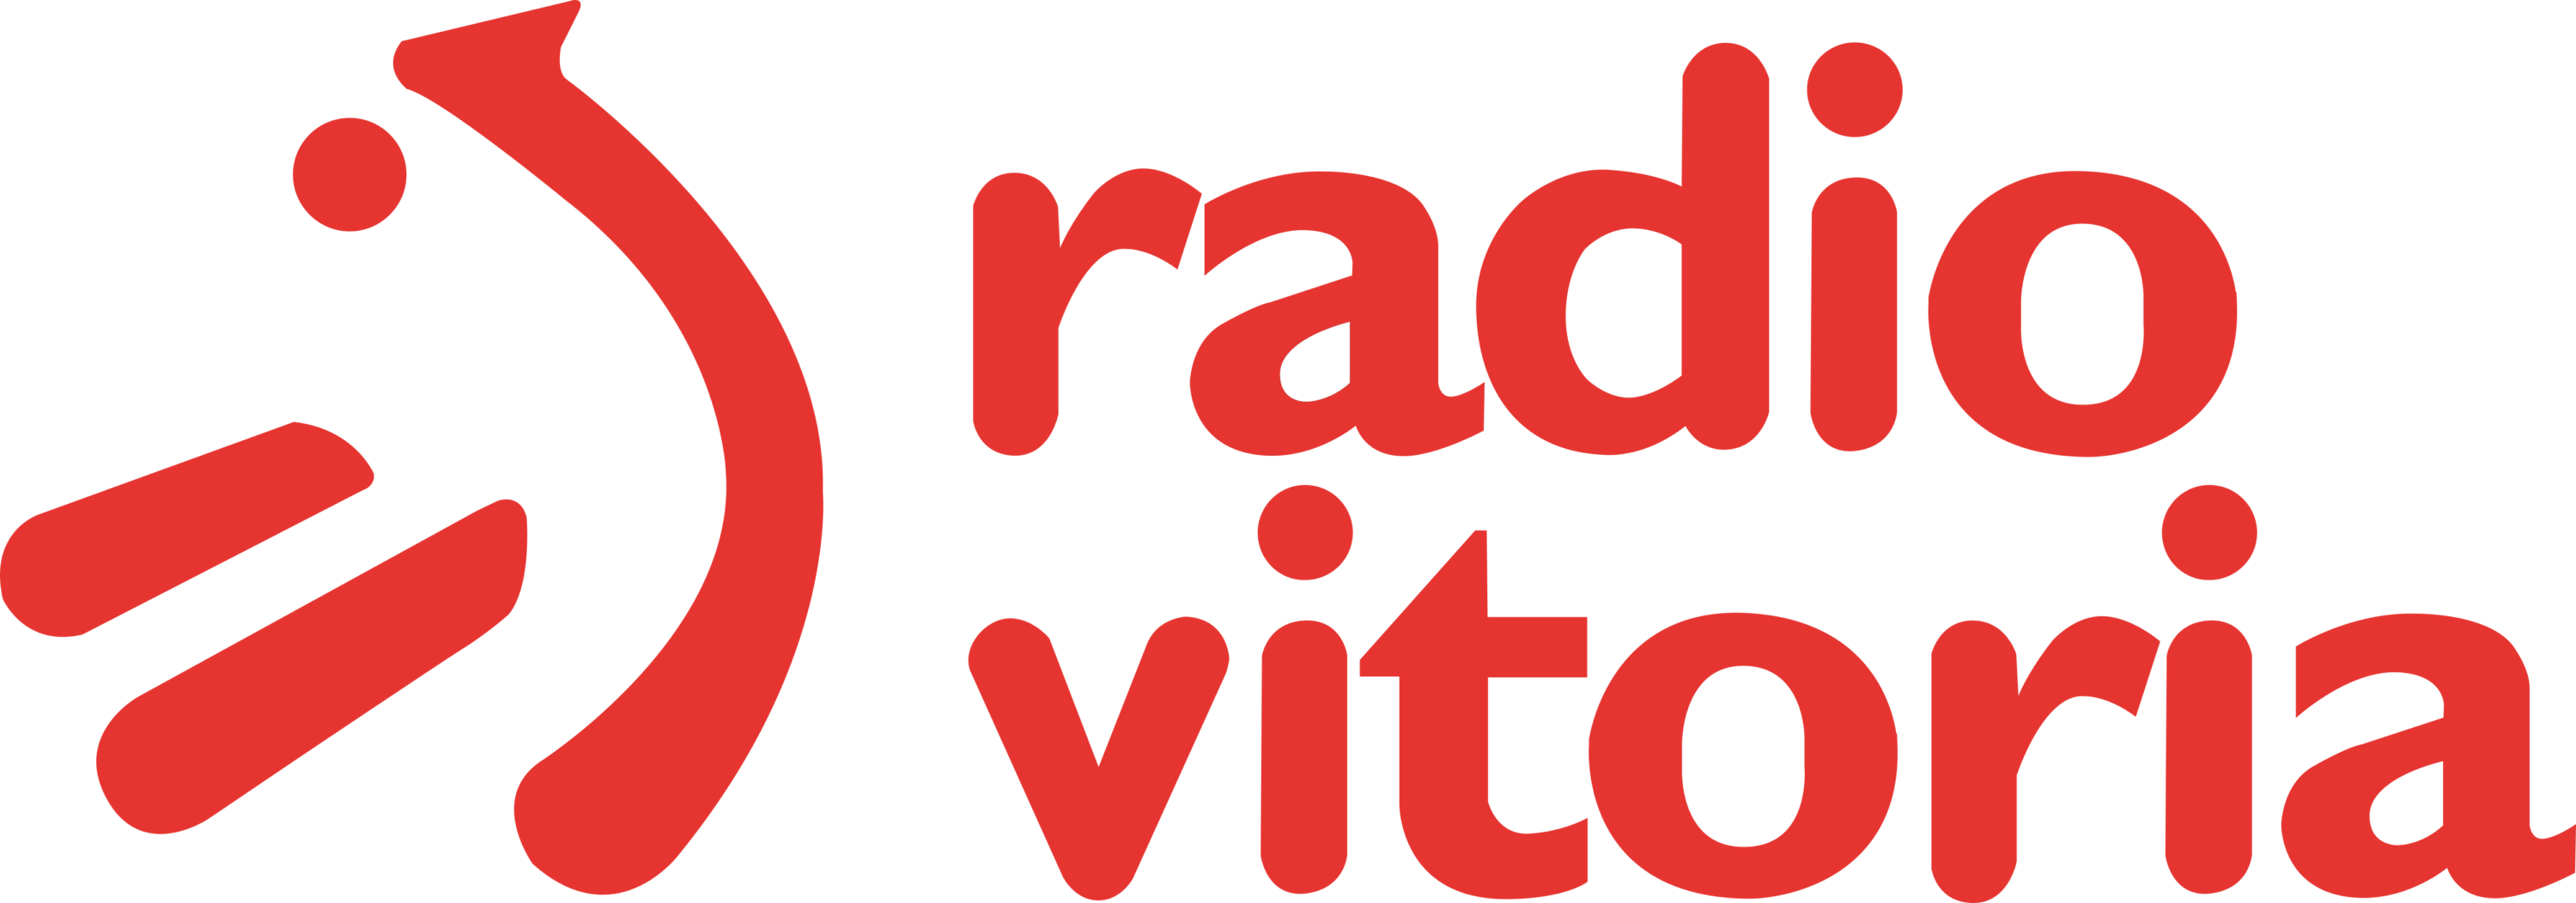 Radio Vitoria Logo